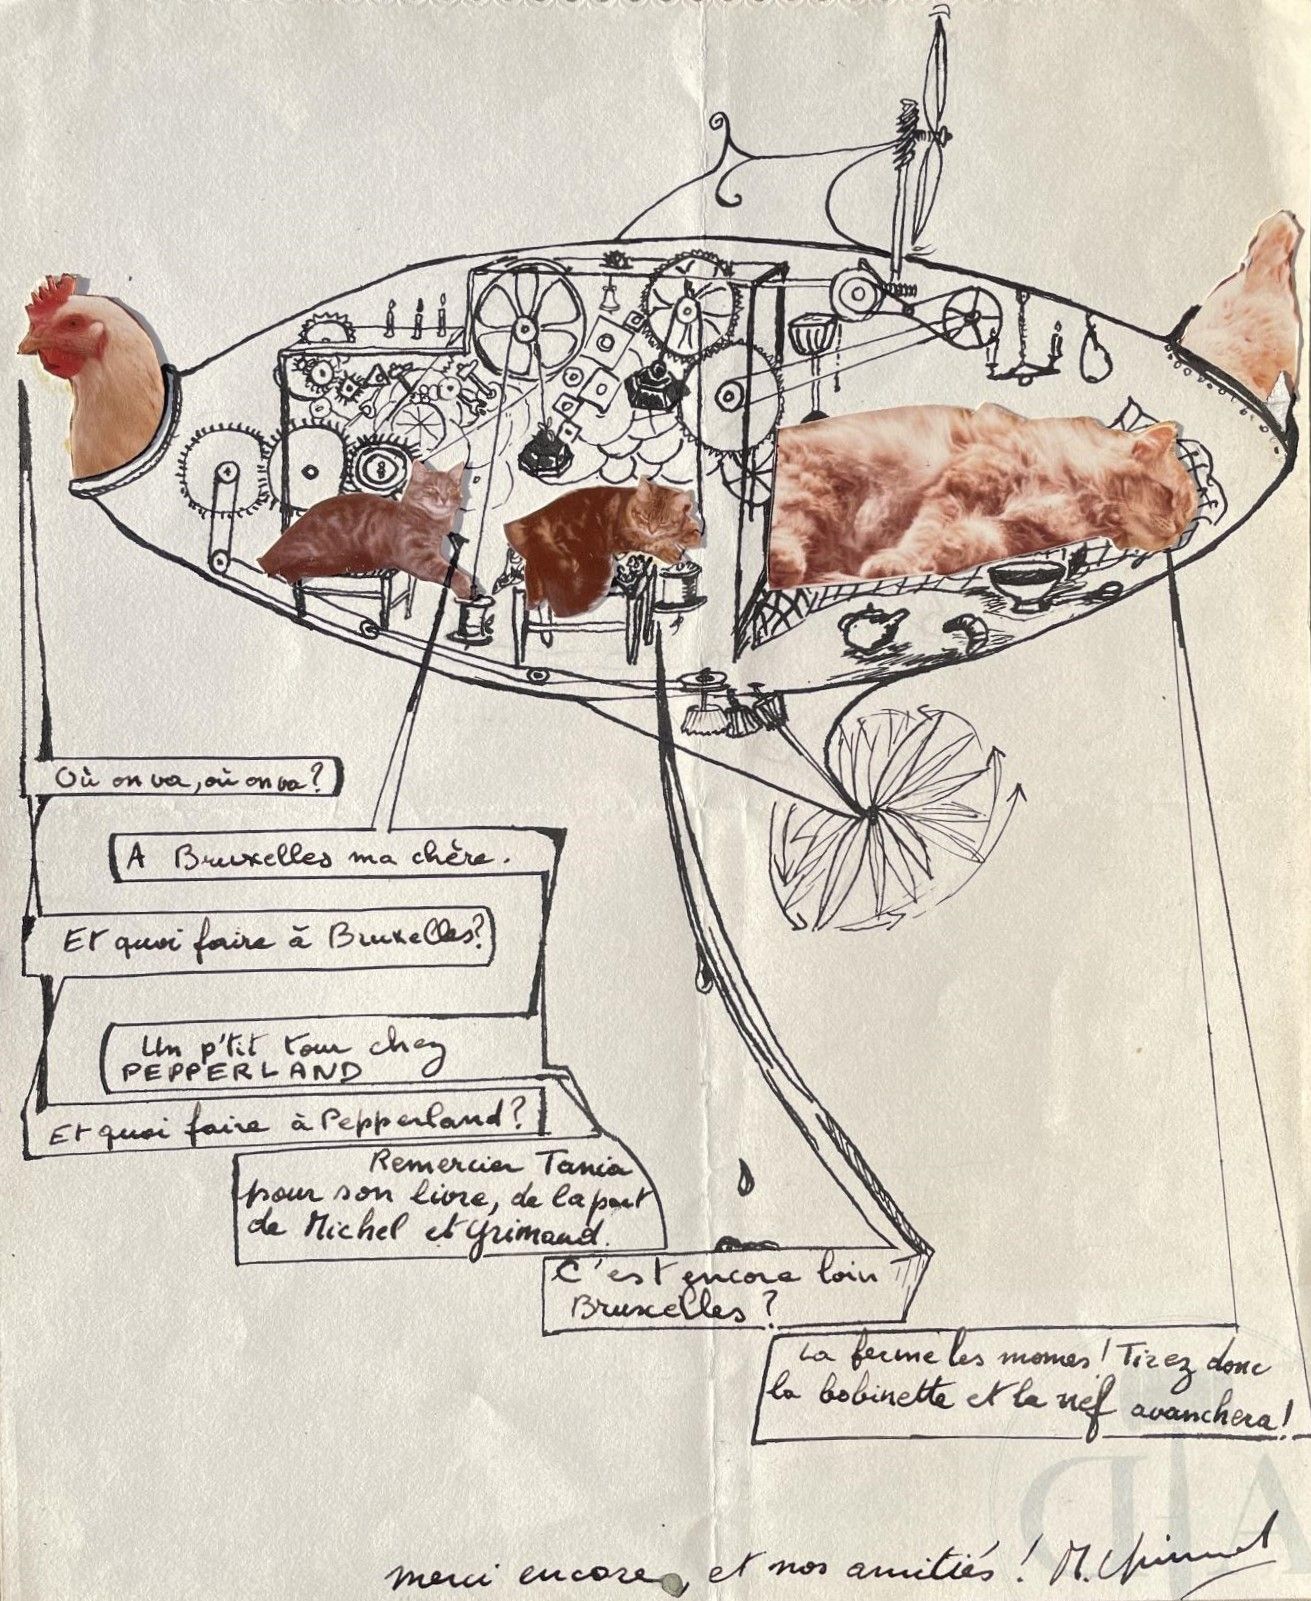 Null 格里莫-米歇尔/超现实主义绘画，为感谢佩珀兰书店的塔尼娅而作。 印度墨水和拼贴的照片，1985年左右。 罕见的。 TBE中间有一道折痕。 格式A4

&hellip;